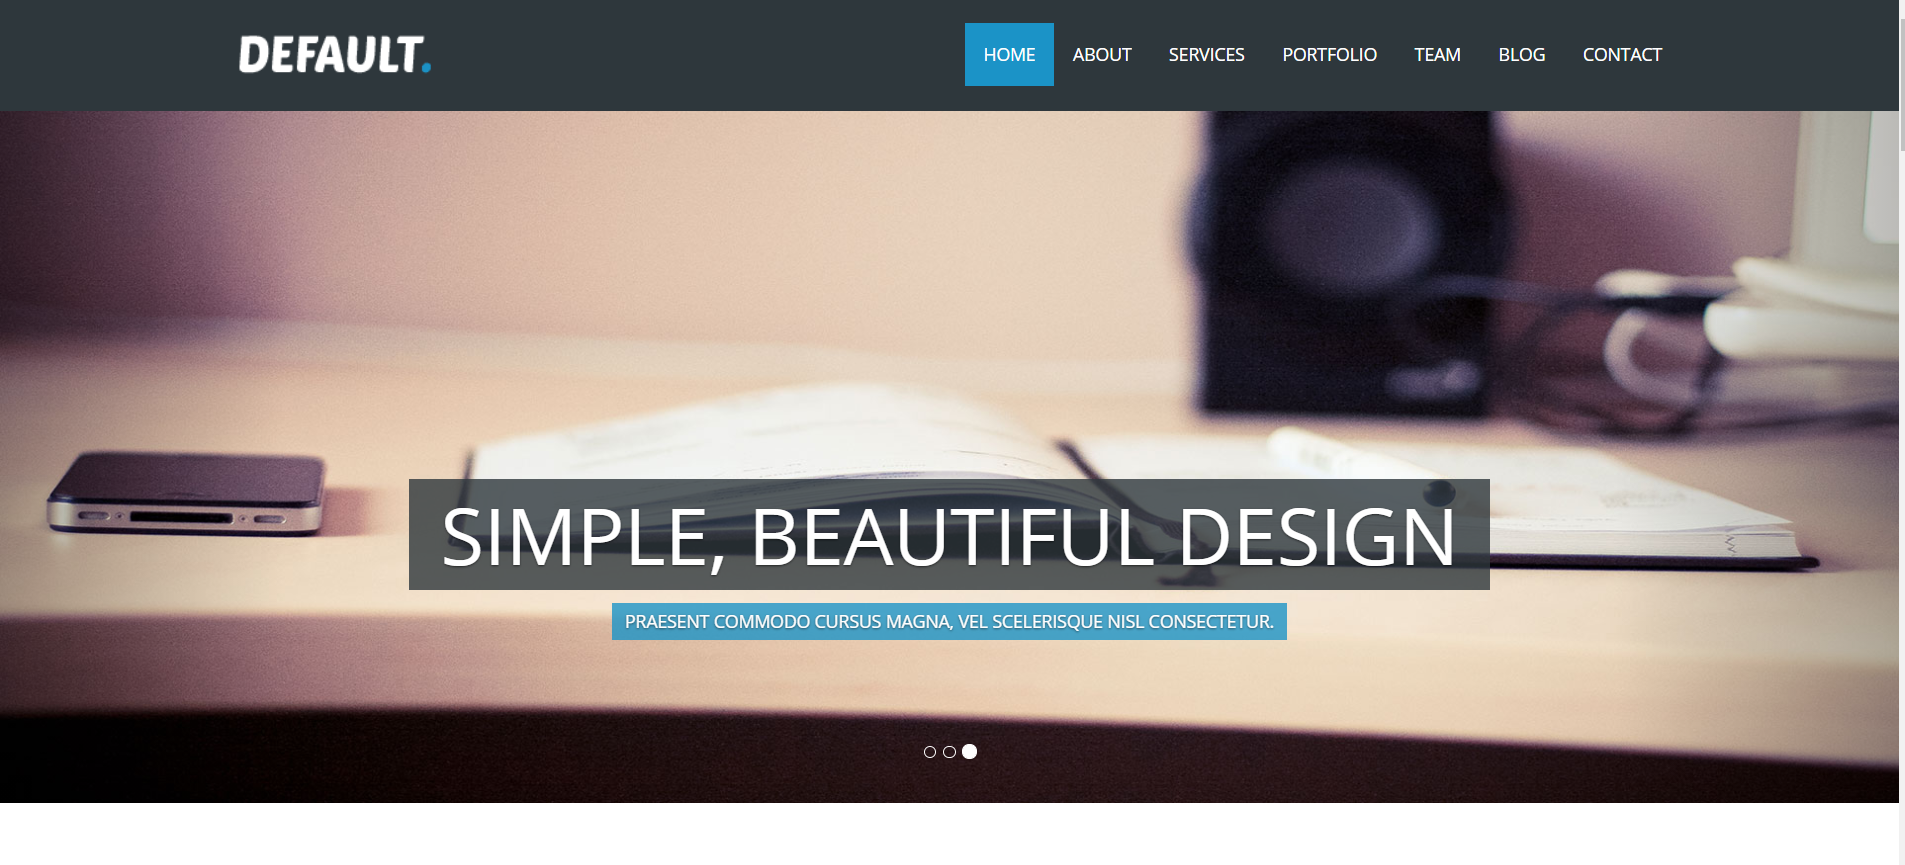 Default Website Theme image | Student Online Bio & Resume | 1 Page Mobile Responsive Website Design | Mr. Riese